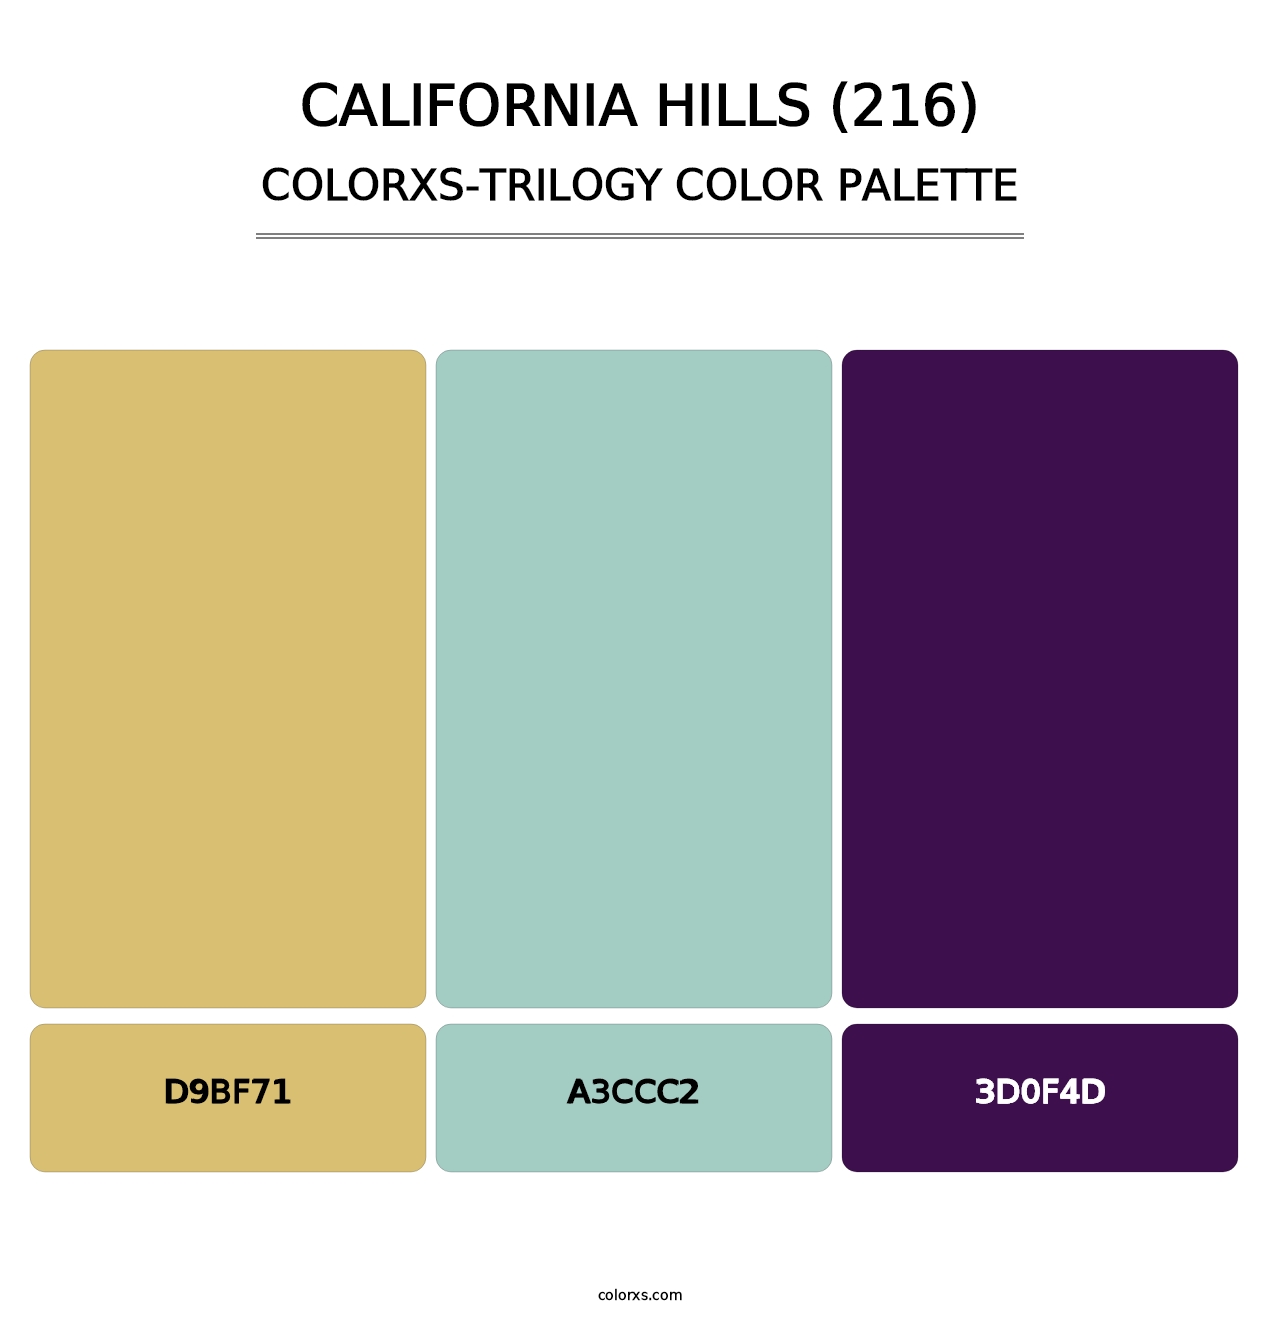 California Hills (216) - Colorxs Trilogy Palette